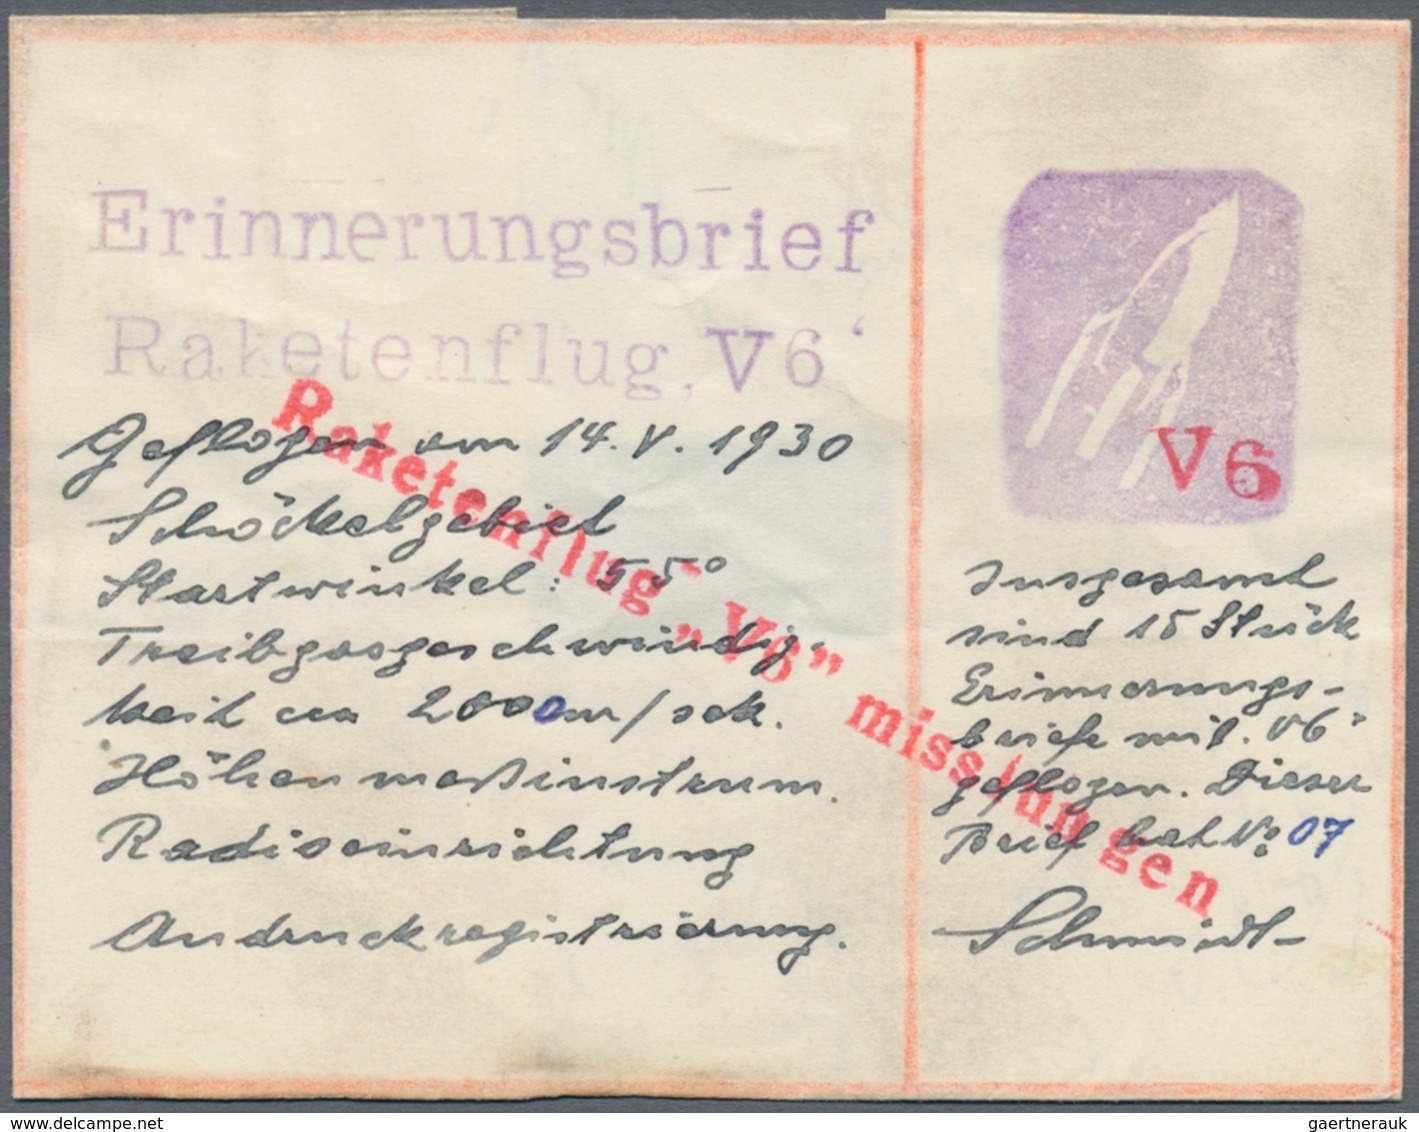 Raketenpost: Friedrich Schmiedl was born on 14.05.1902 in Schwertberg in Upper Austria. At the age o